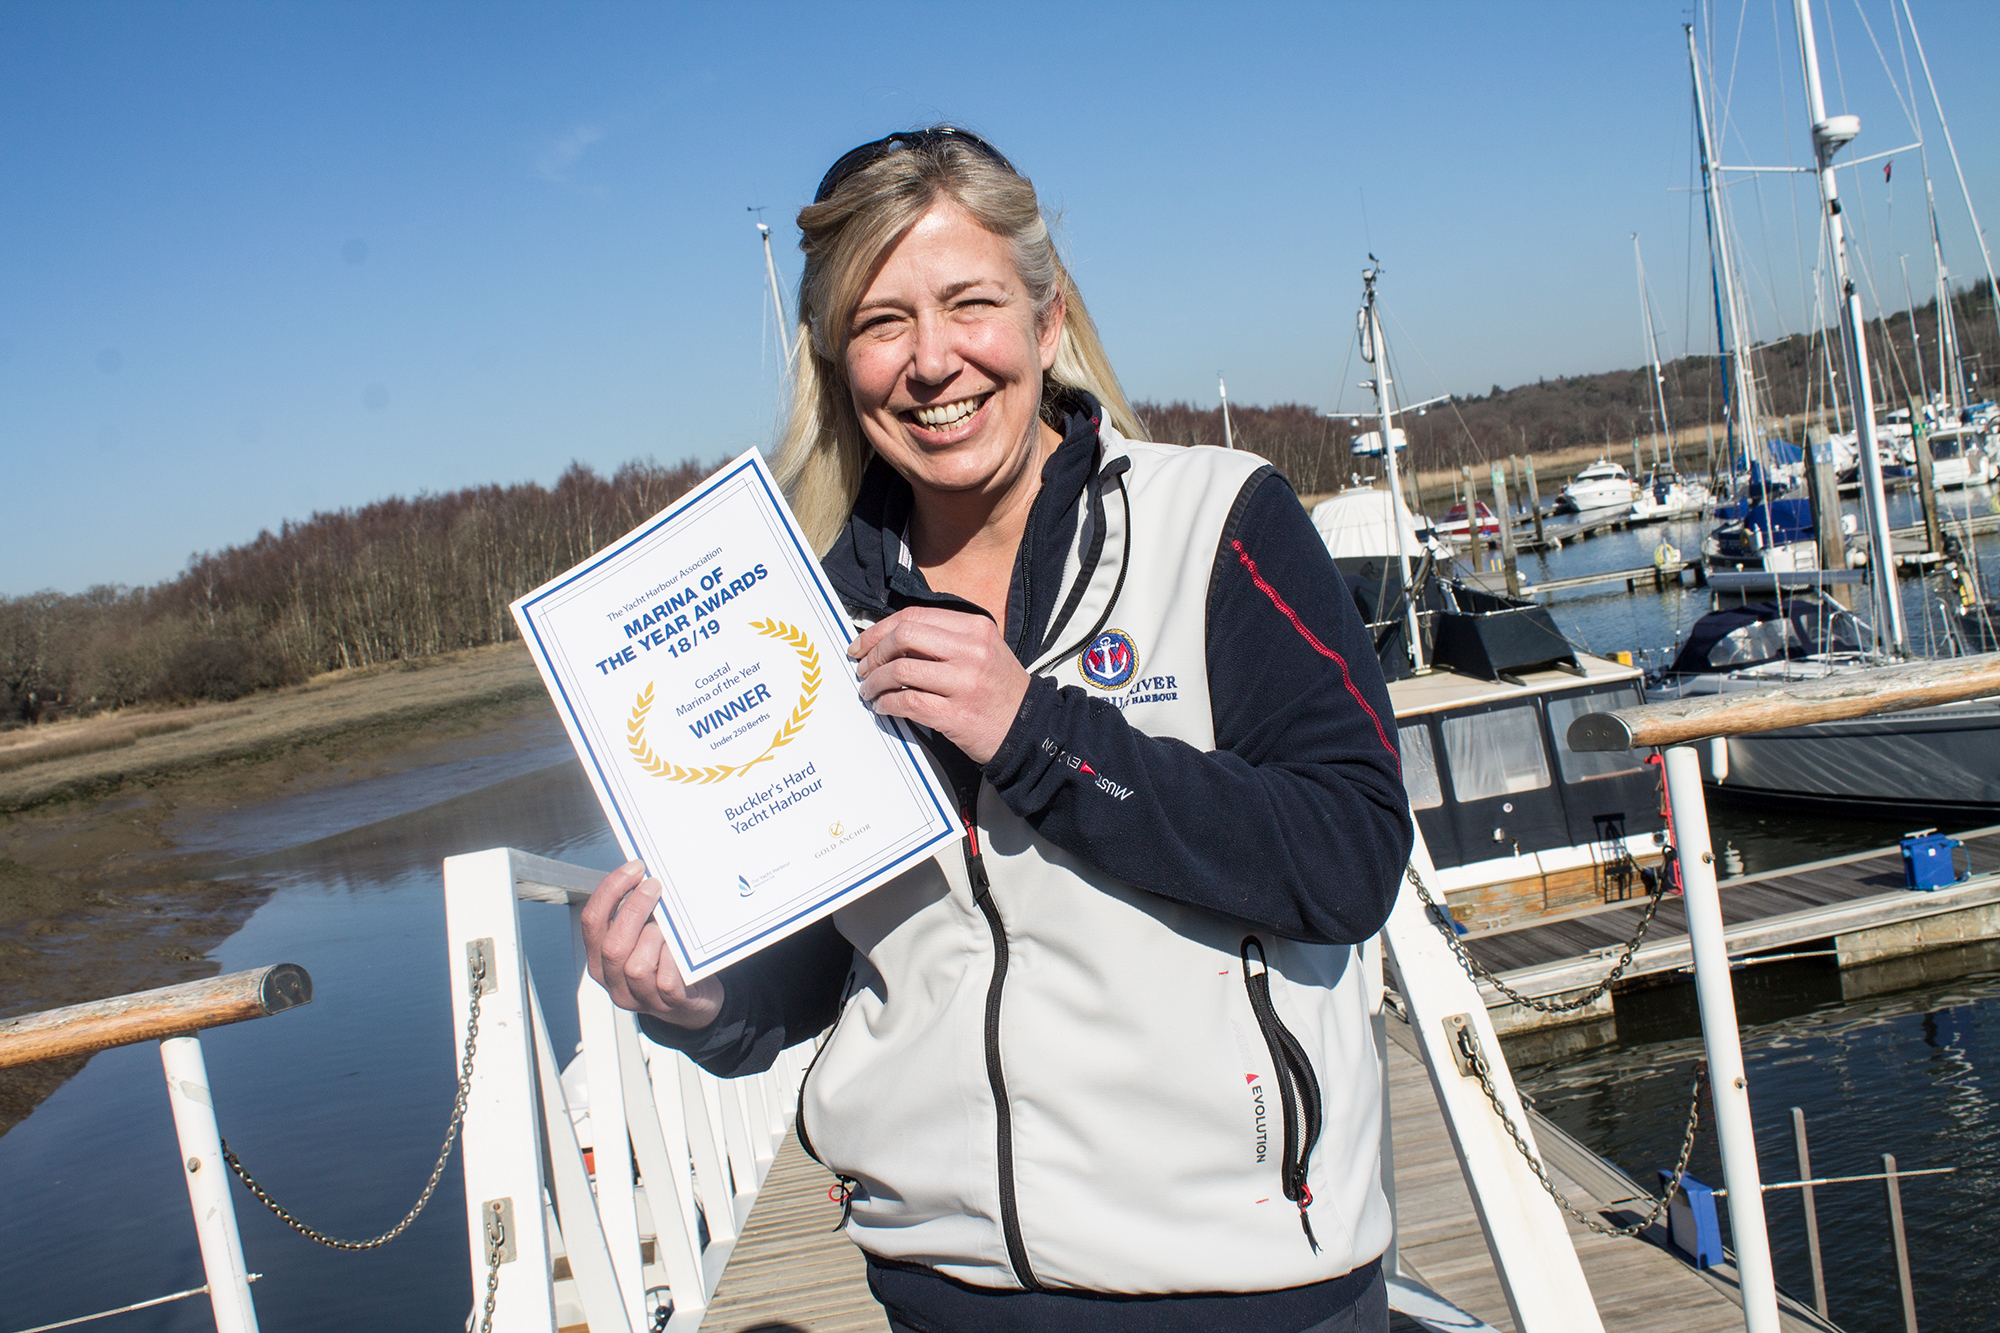 Wendy Stowe with winner certificate